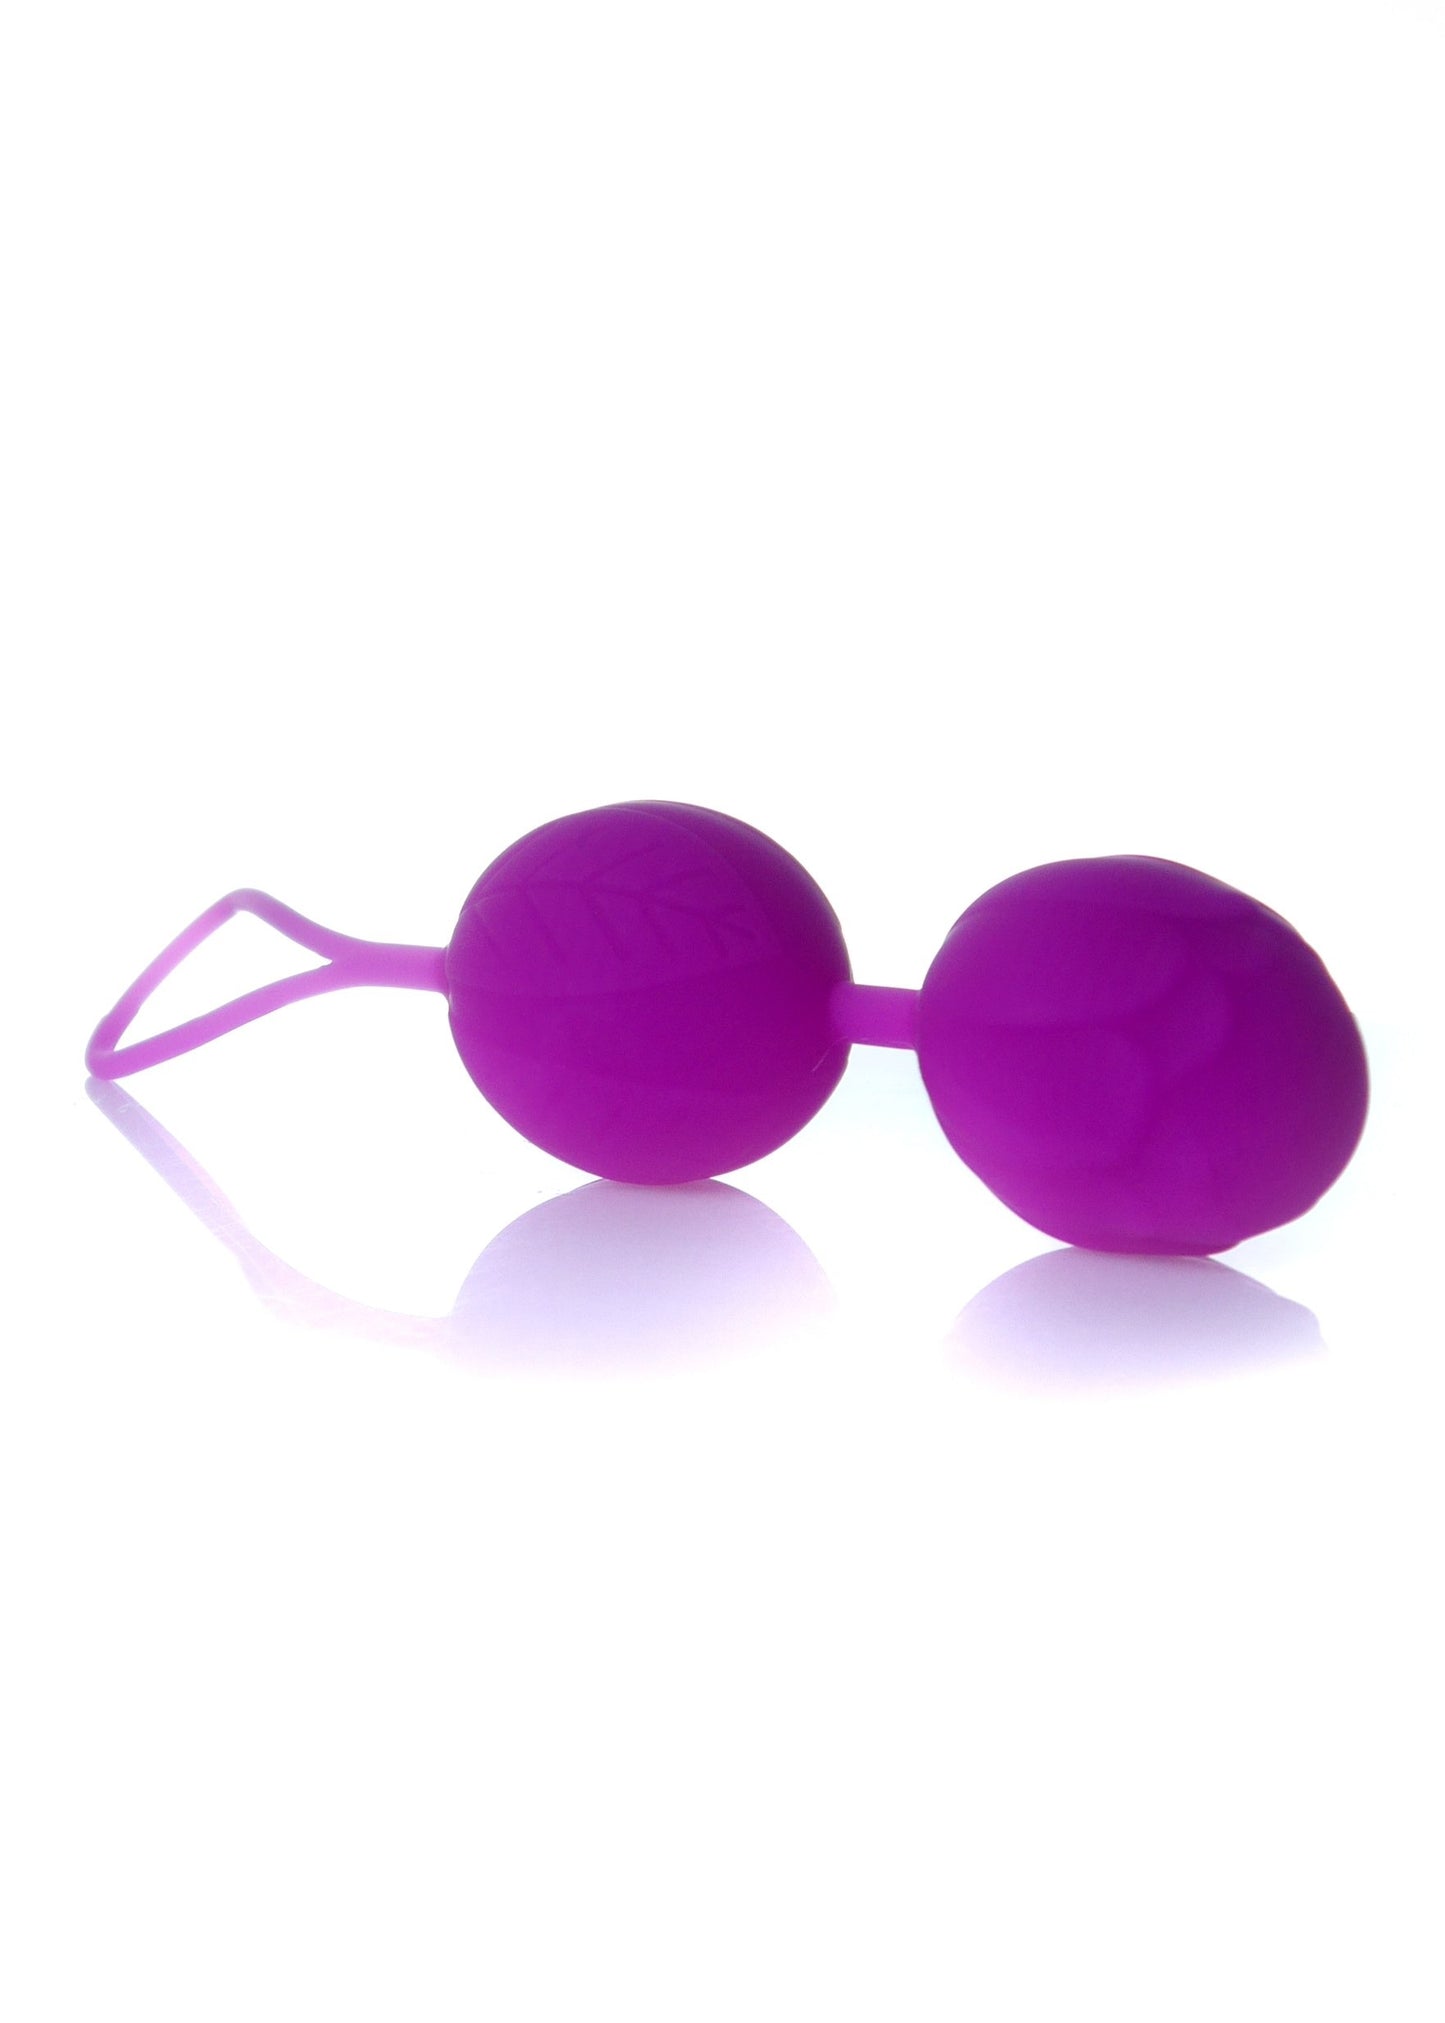 Bossoftoys - 67-00083 - Kulki - Silicone - Kegel Balls - Purple - Dia 3,6 cm